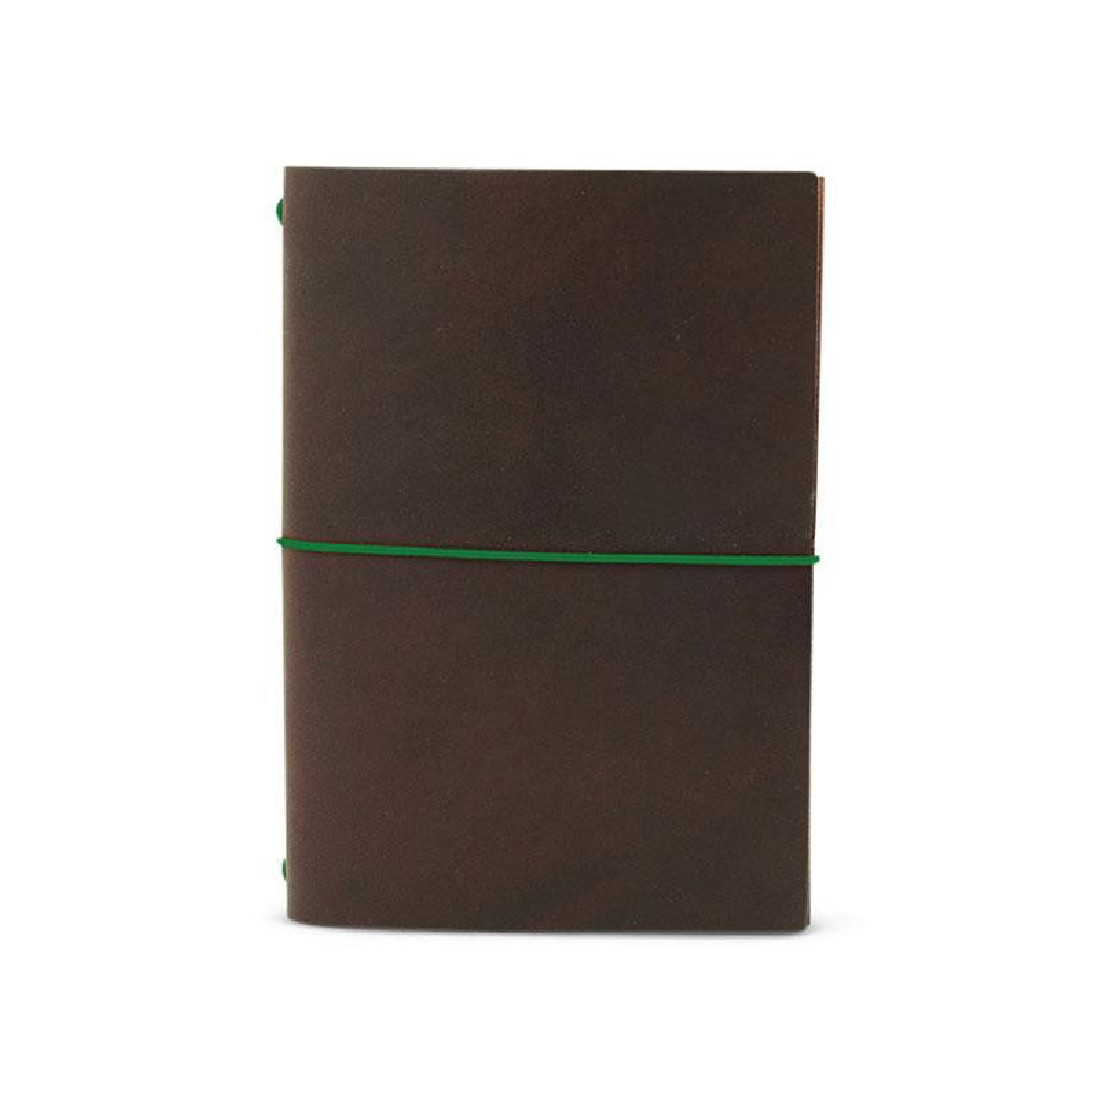 Paper Republic grand voyageur pocket chestnut leather journal